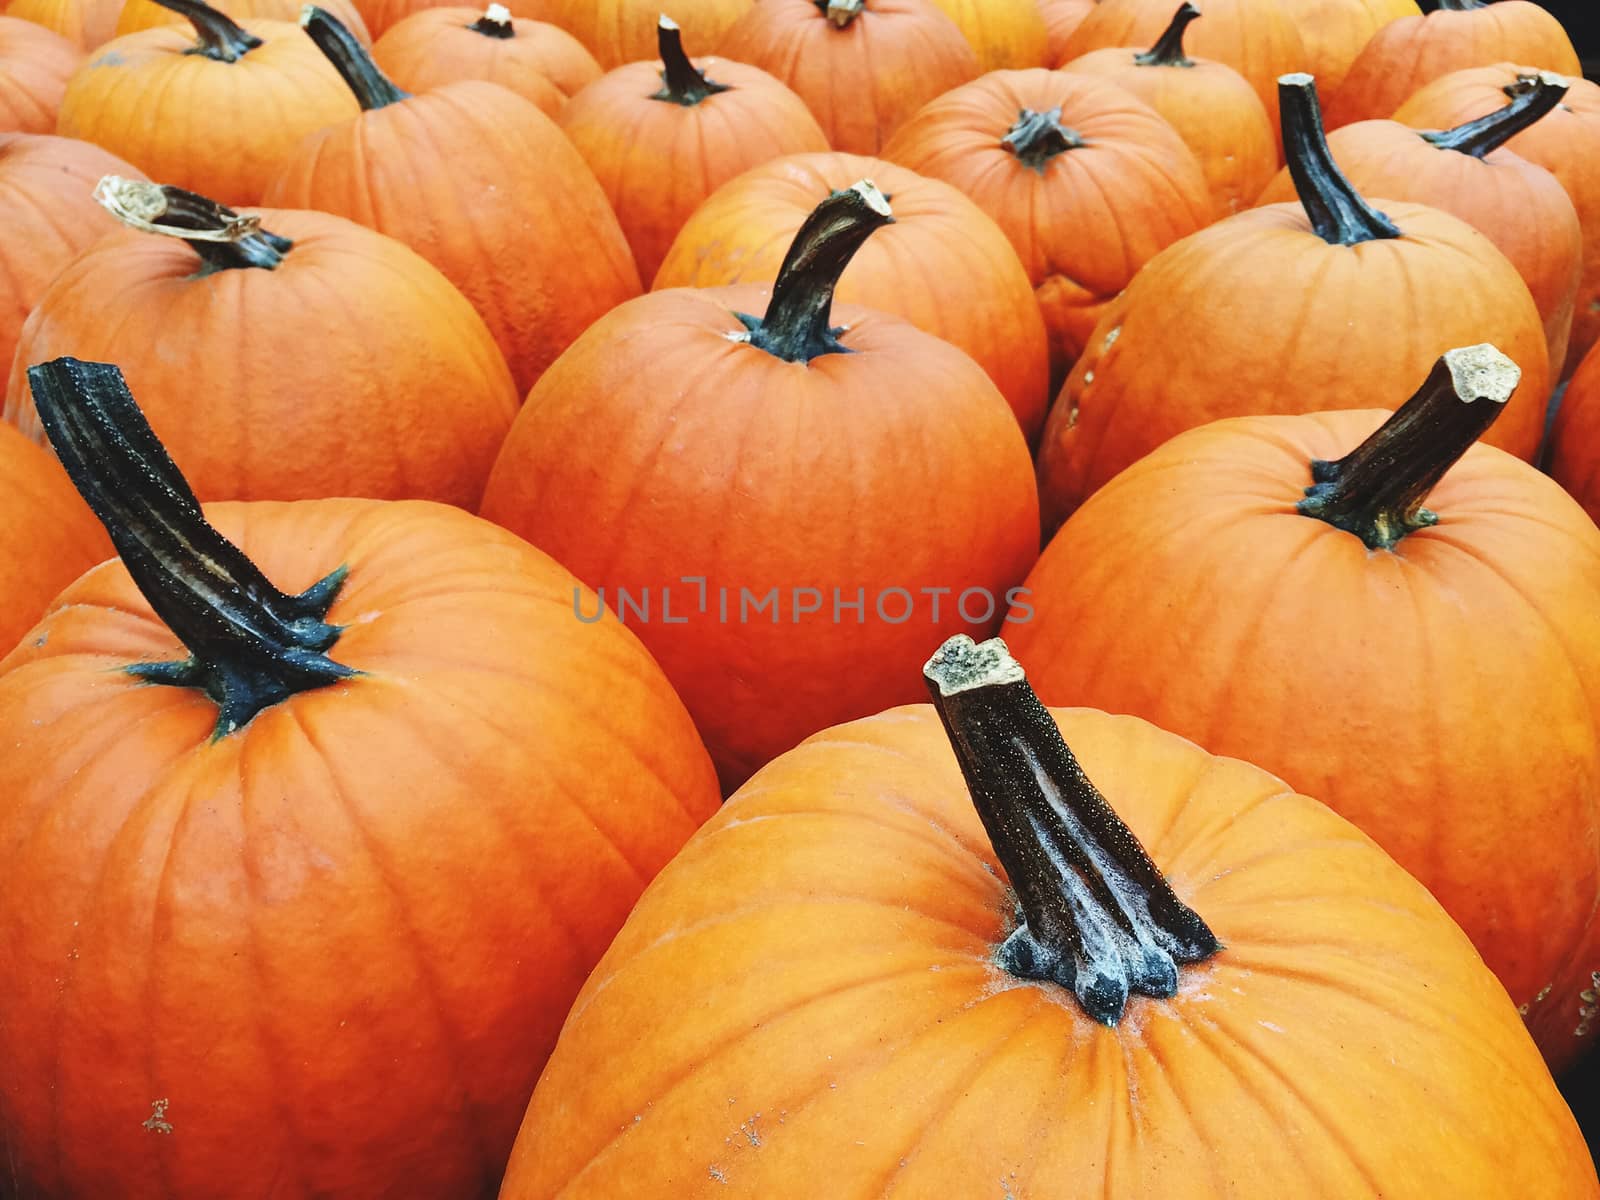 Big bright orange pumpkins at the autumn marketplace.